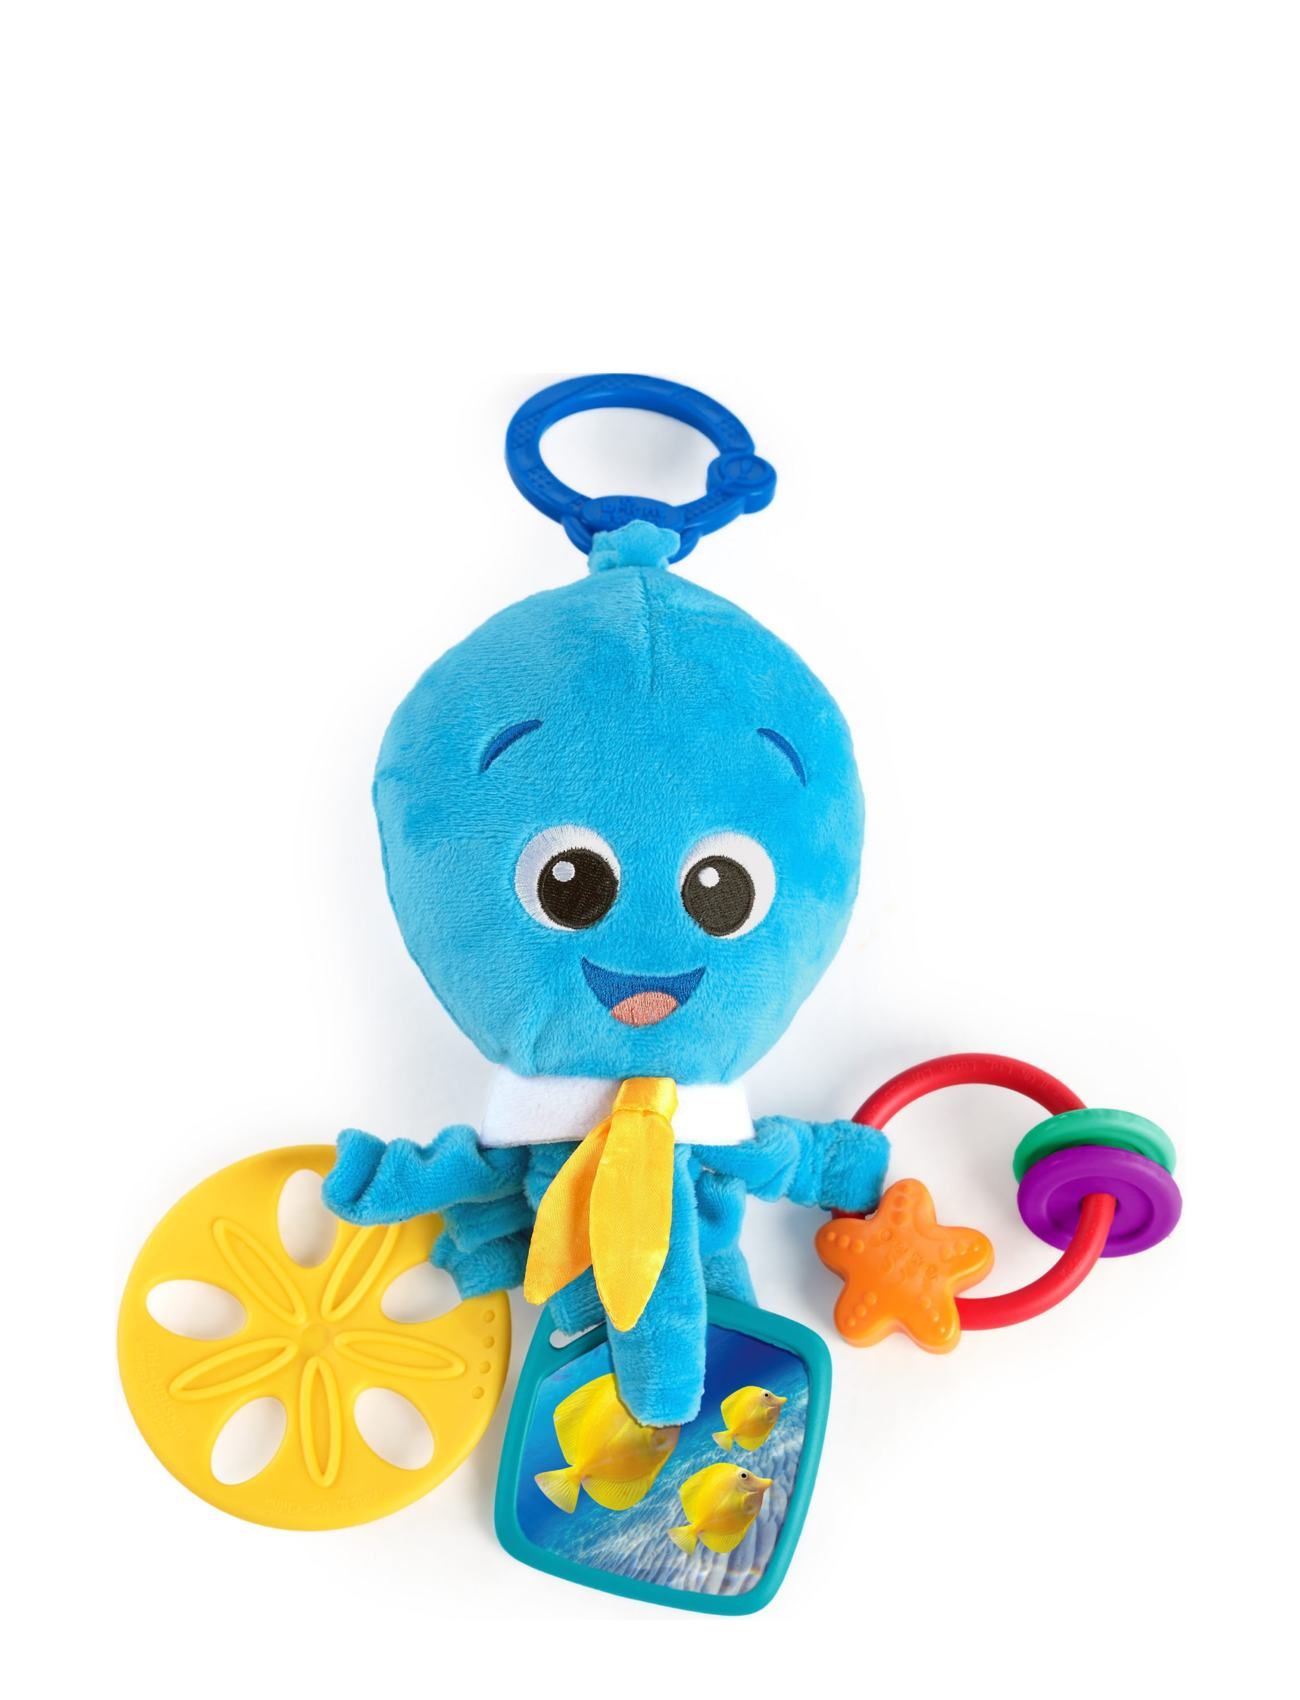 Blæksprutte Aktivitetslegetøj Toys Baby Toys Educational Toys Activity Toys Blue Baby Einstein